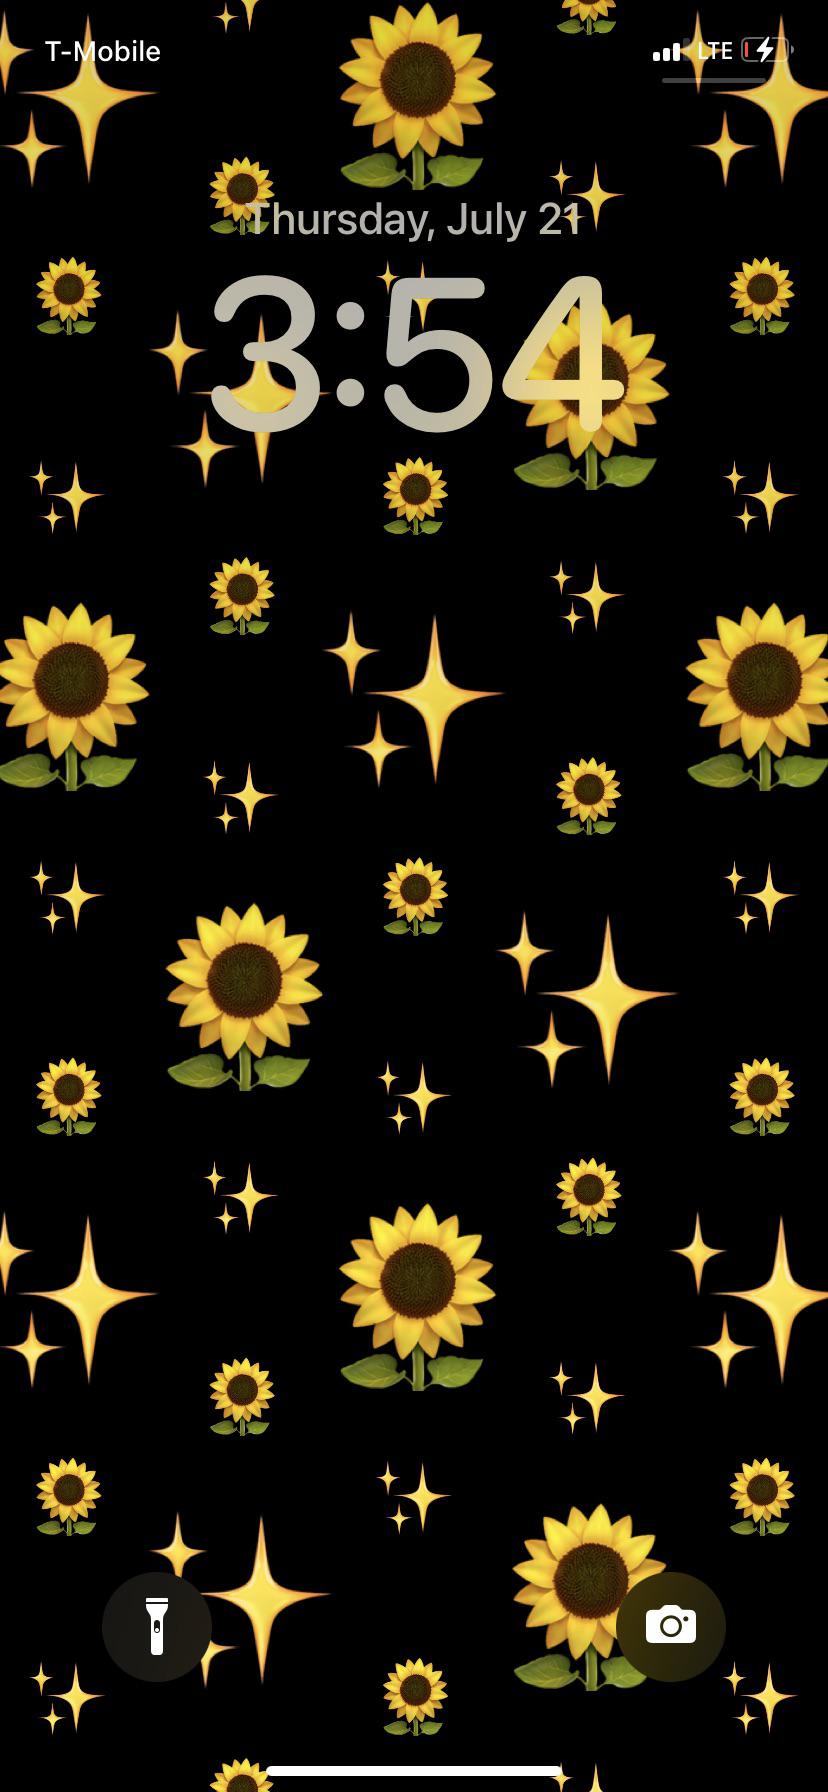 A black phone screen with yellow flowers - Emoji